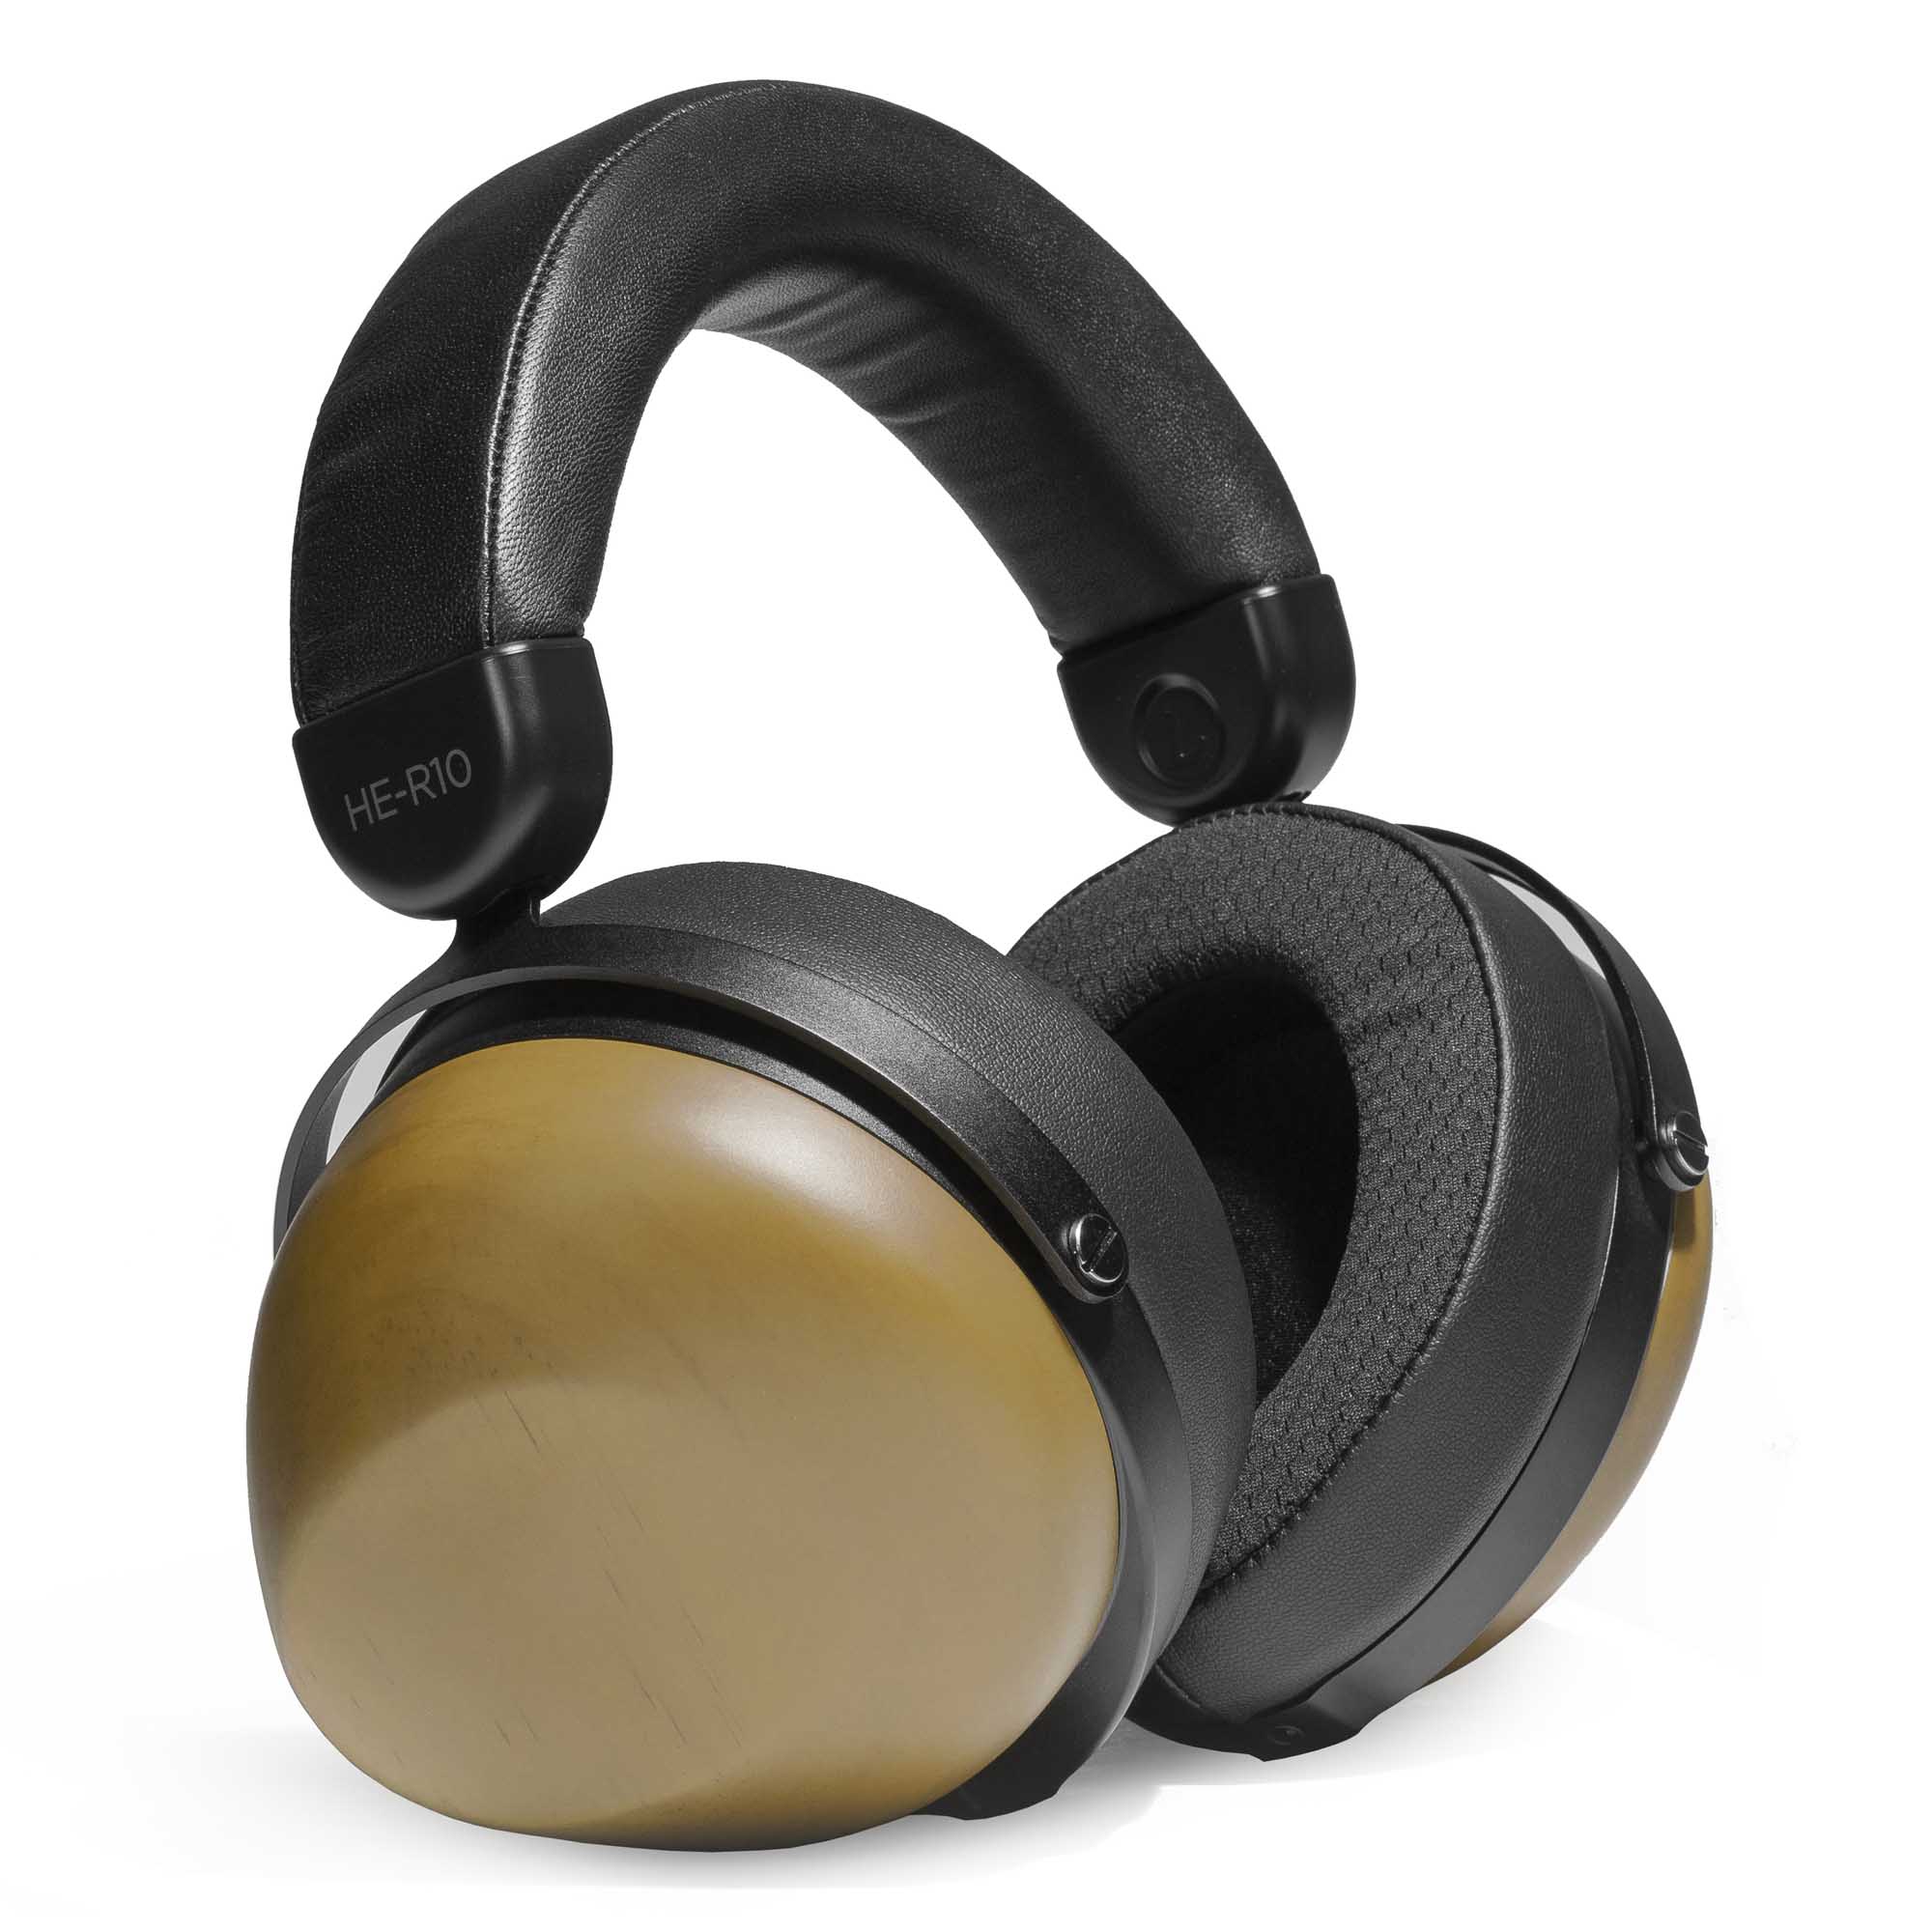 HIFIMAN HE-R10D Dynamic Closed-Back Headphones